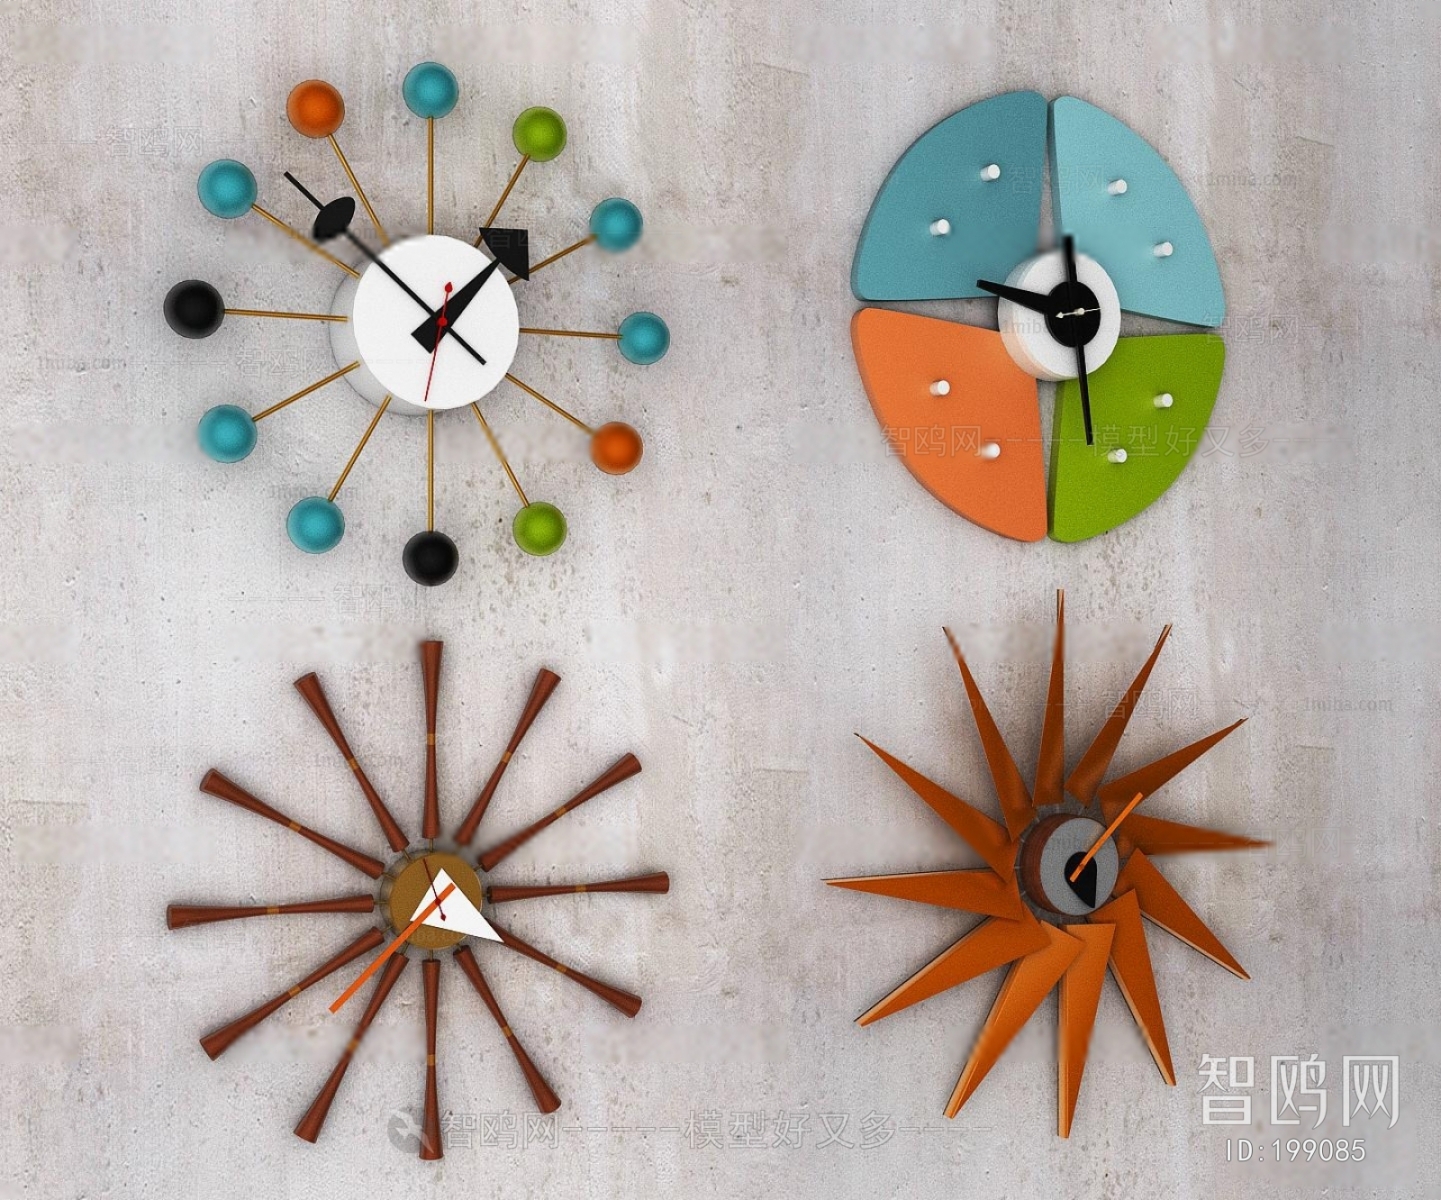 Mediterranean Style Clocks And Watches